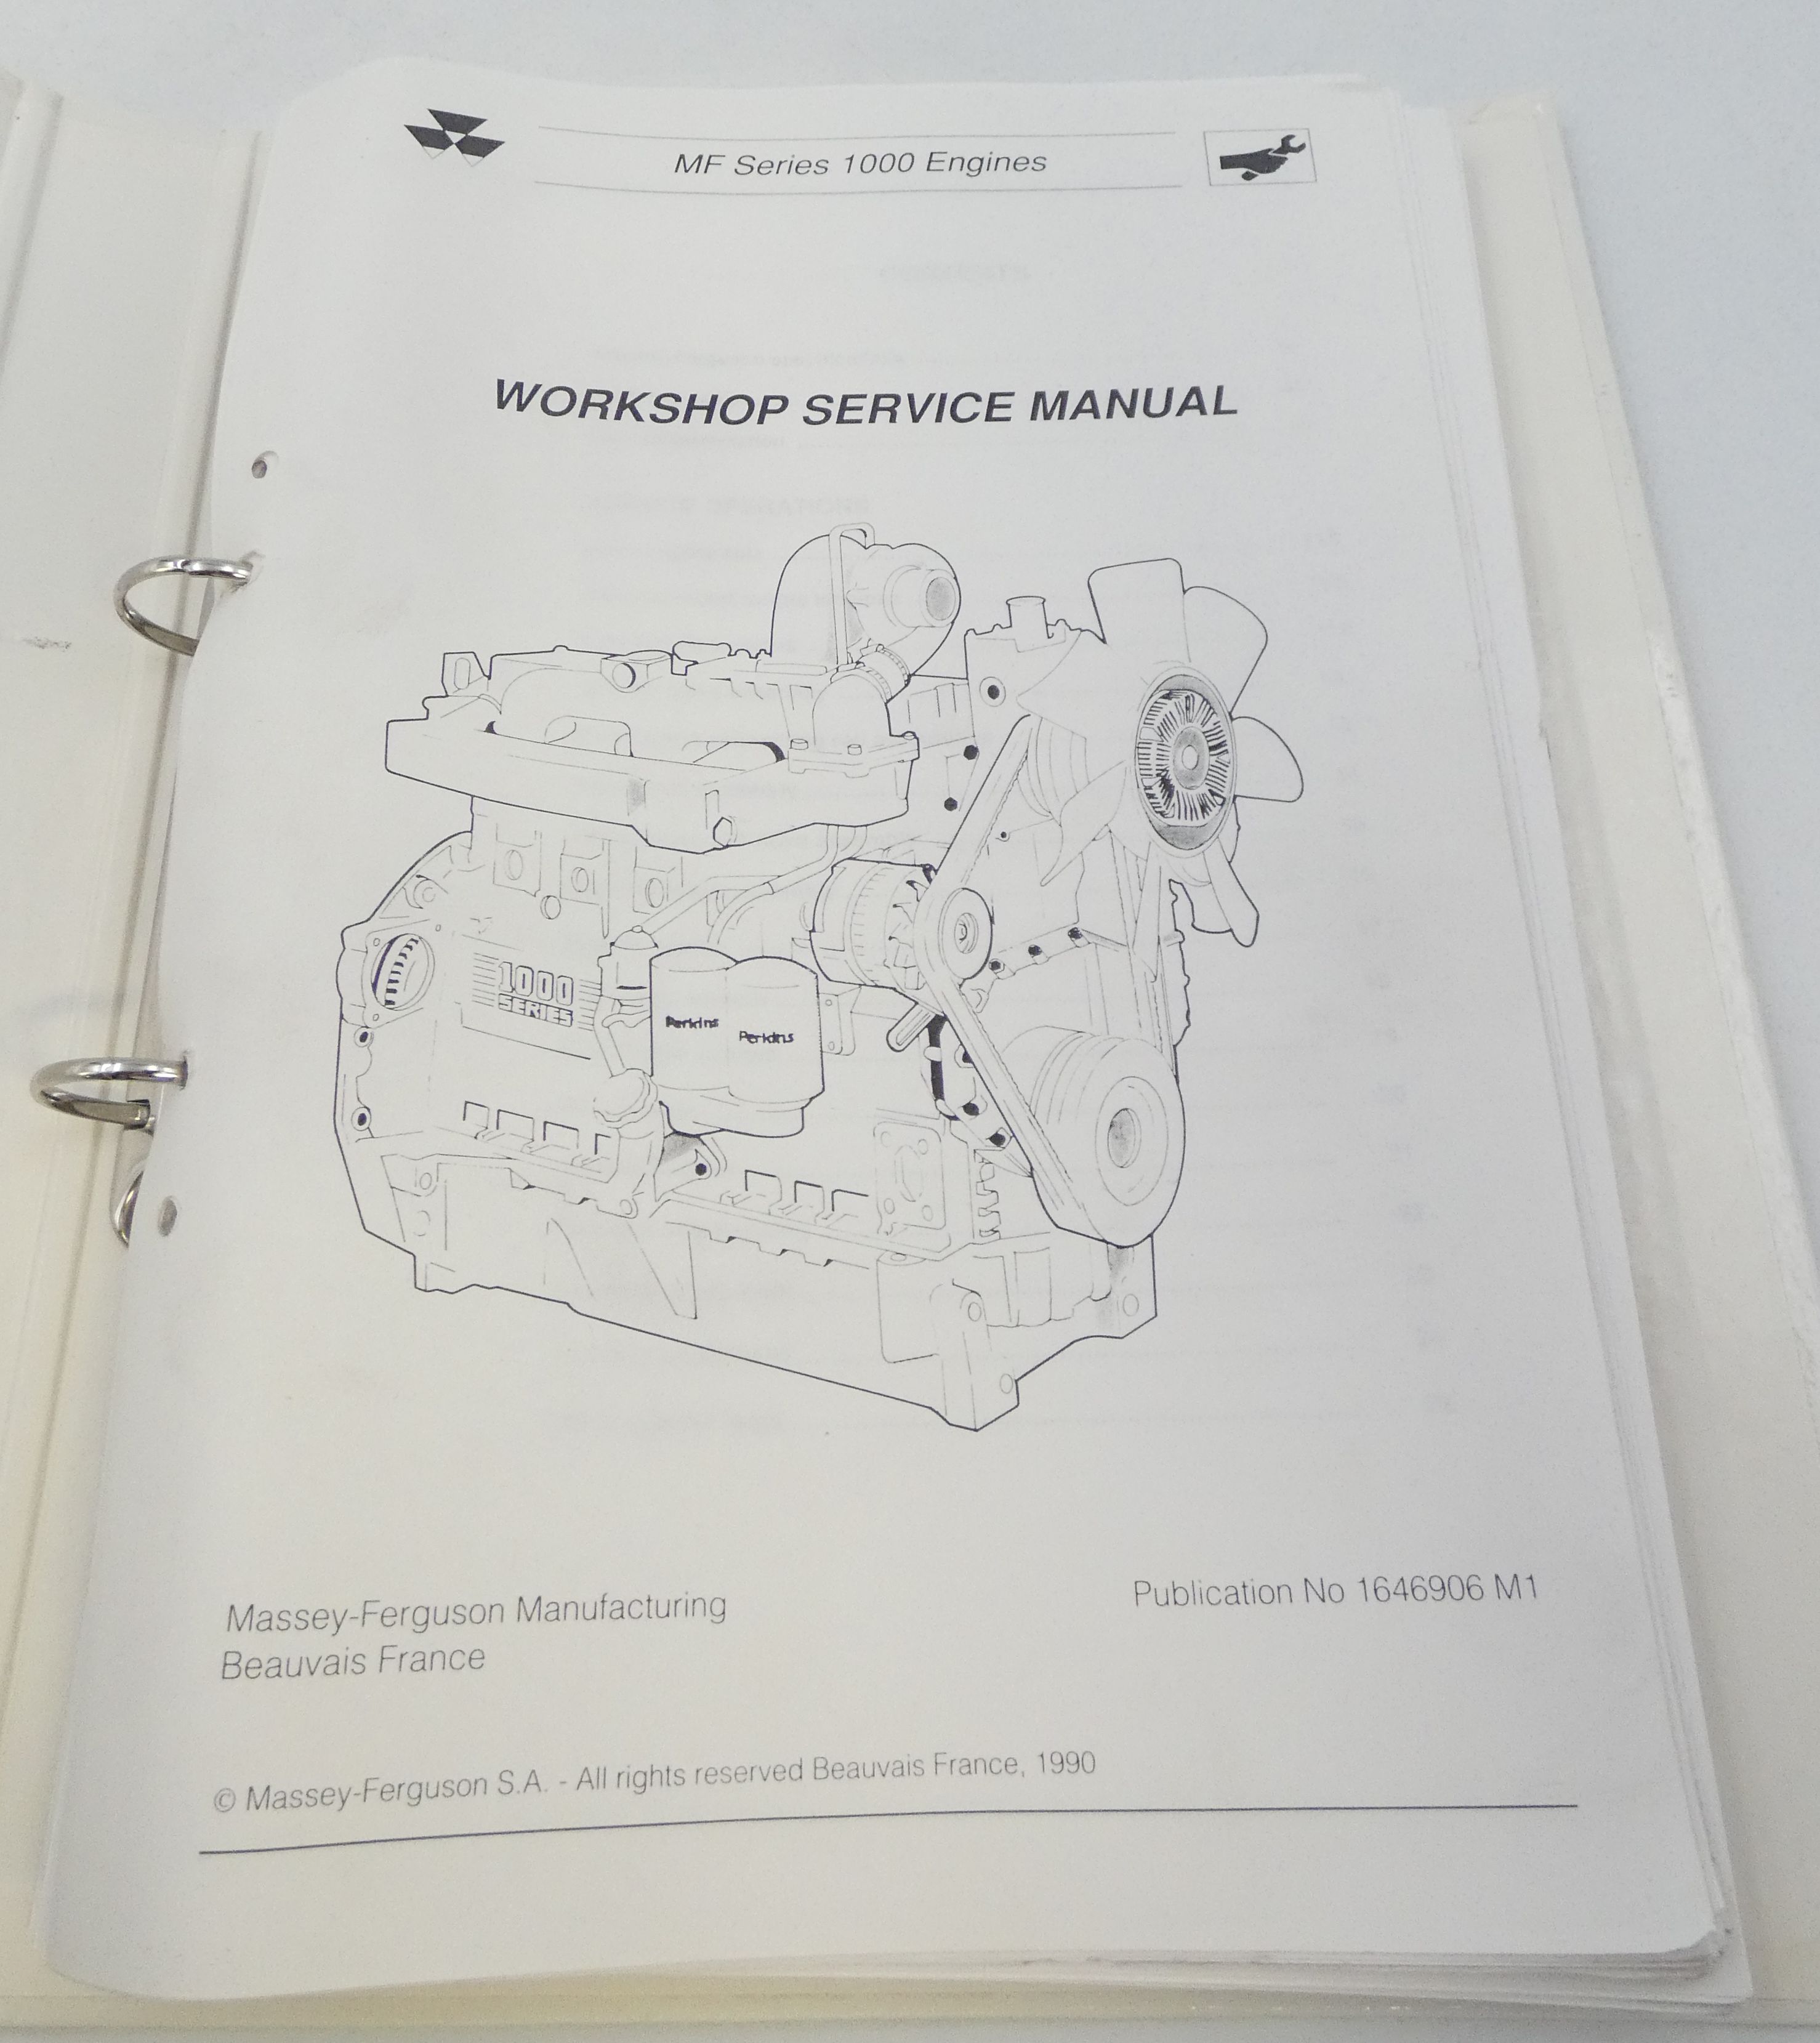 Massey Ferguson MF - series 1000 engines workshop service manual